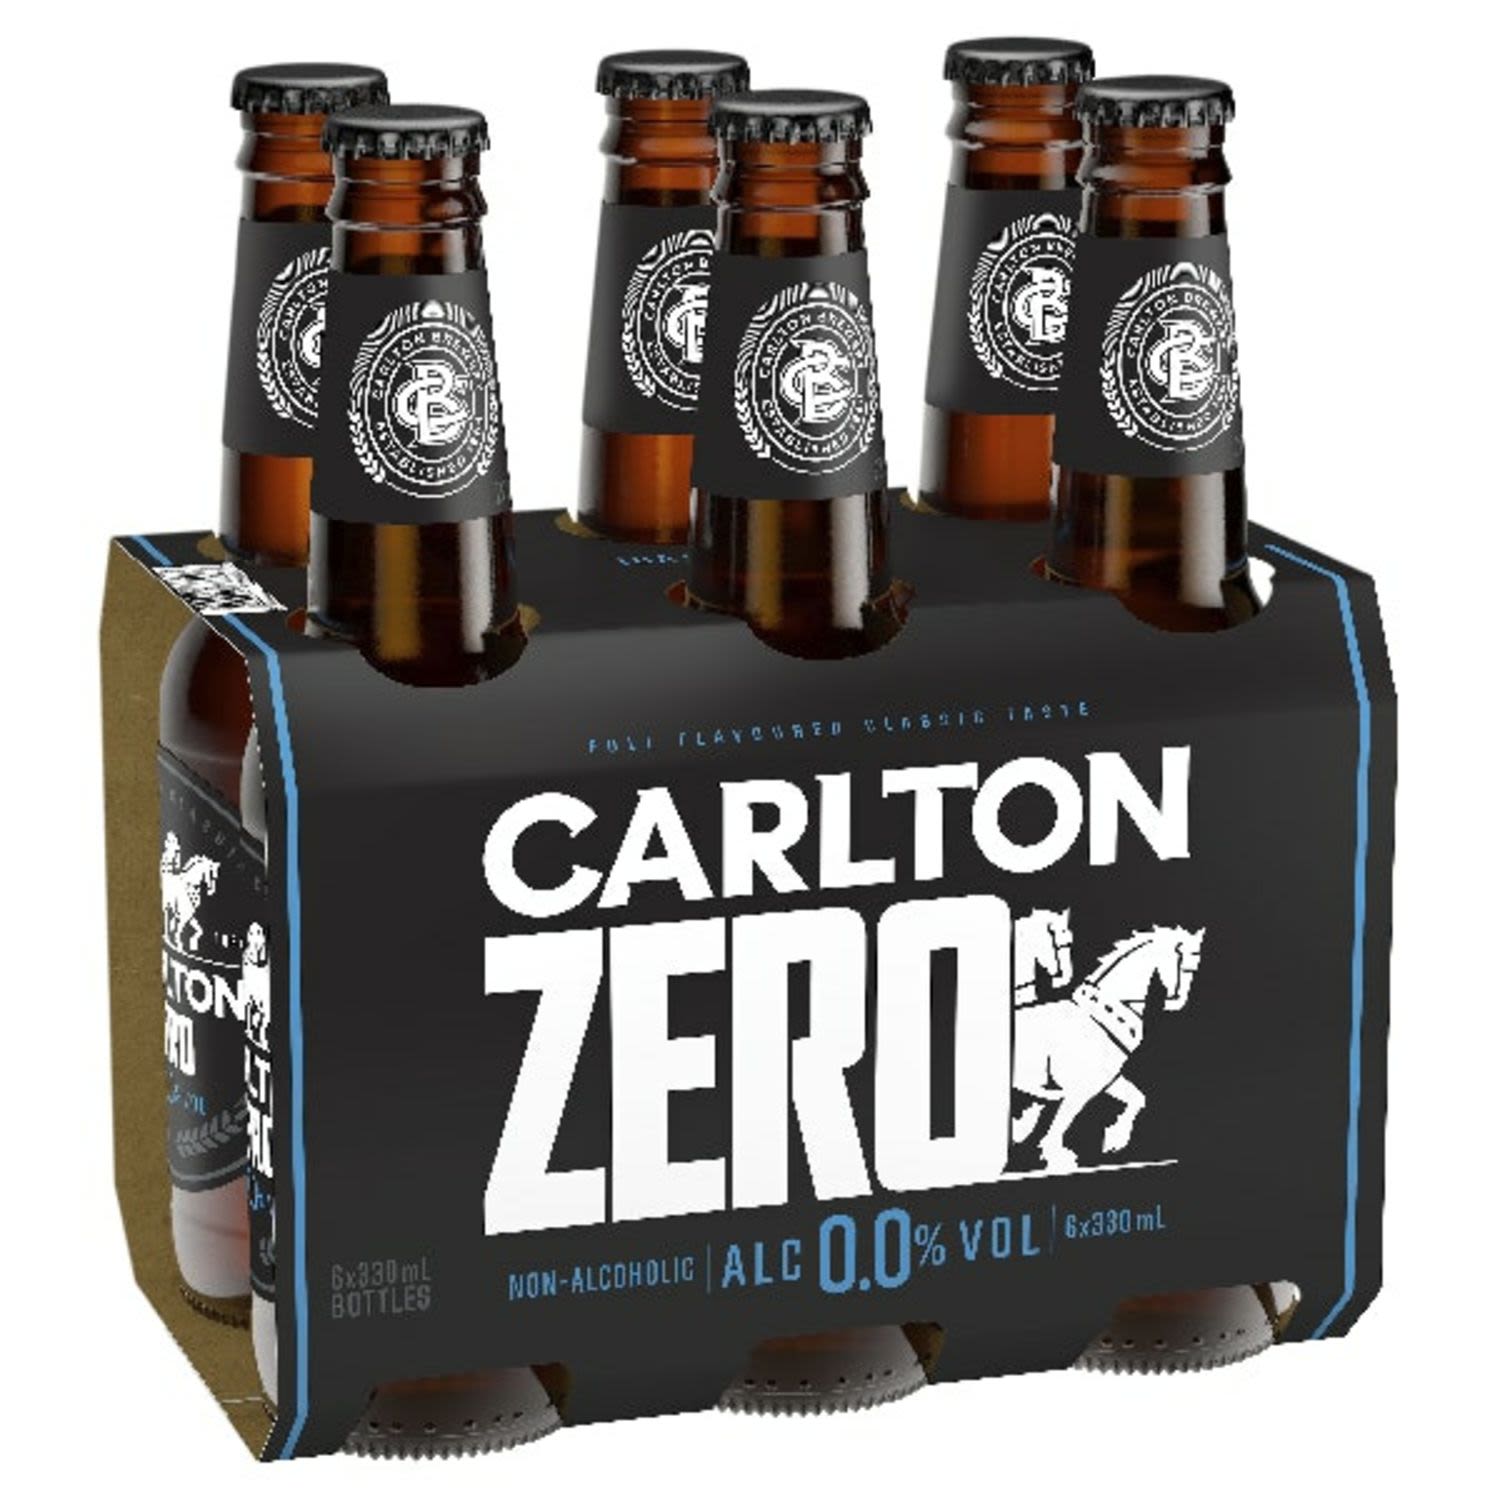 Carlton Zero Non Alcoholic Beer Bottle 330mL 6 Pack